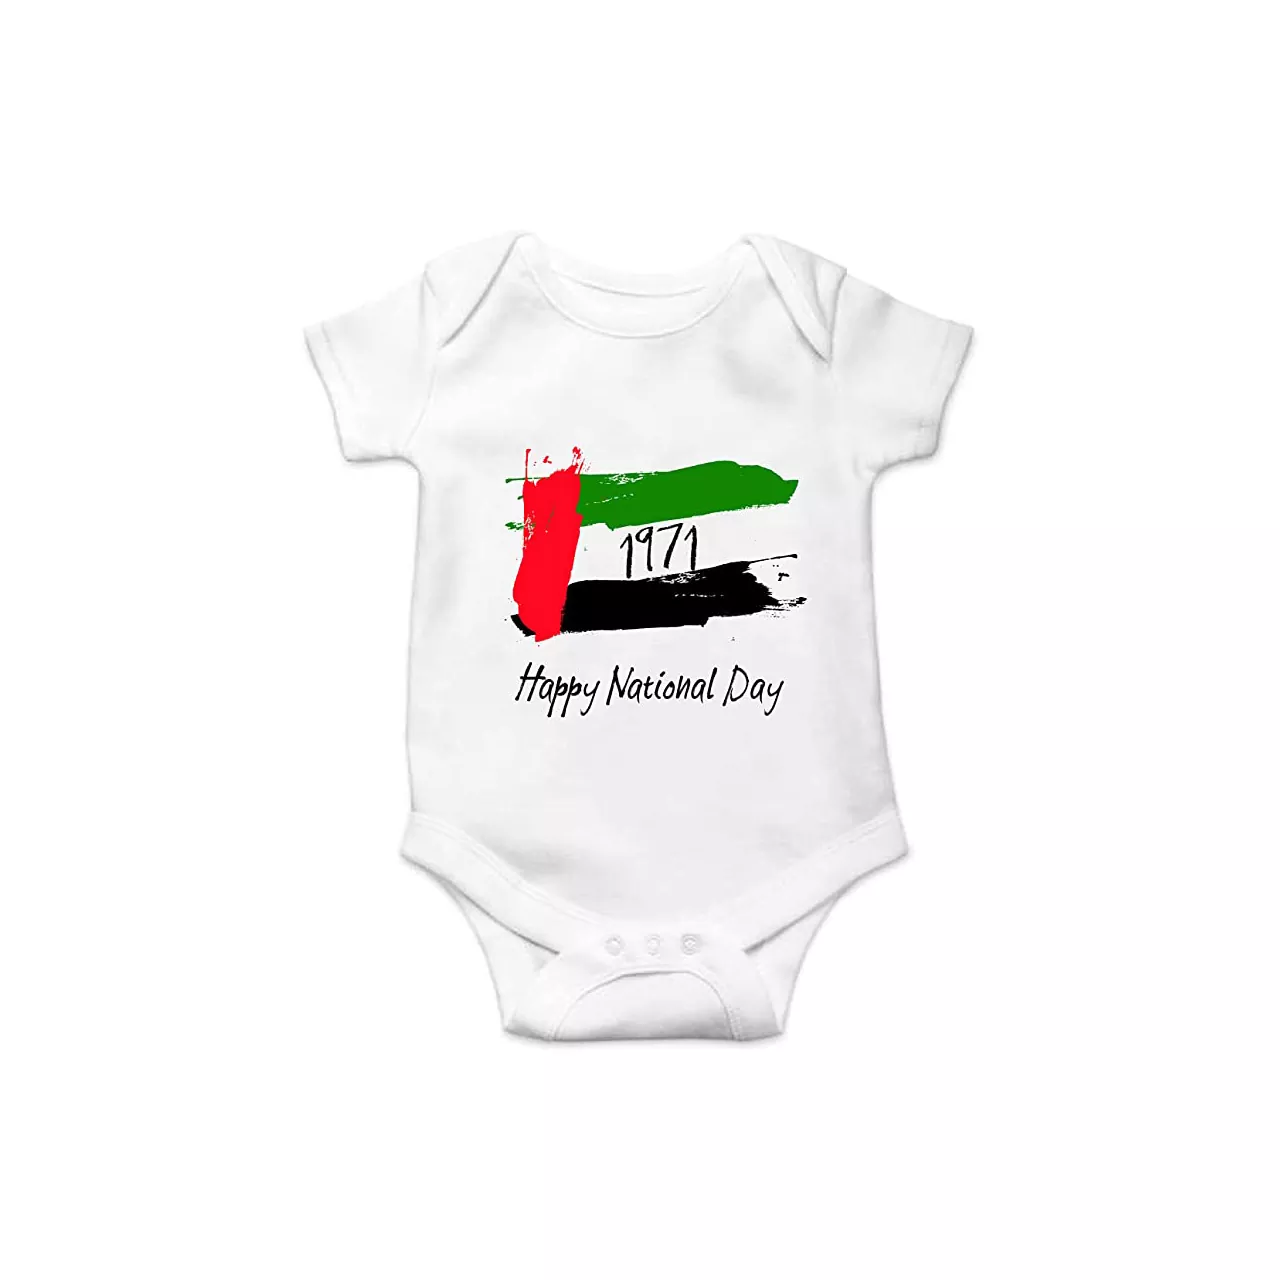 UAE Baby Romper